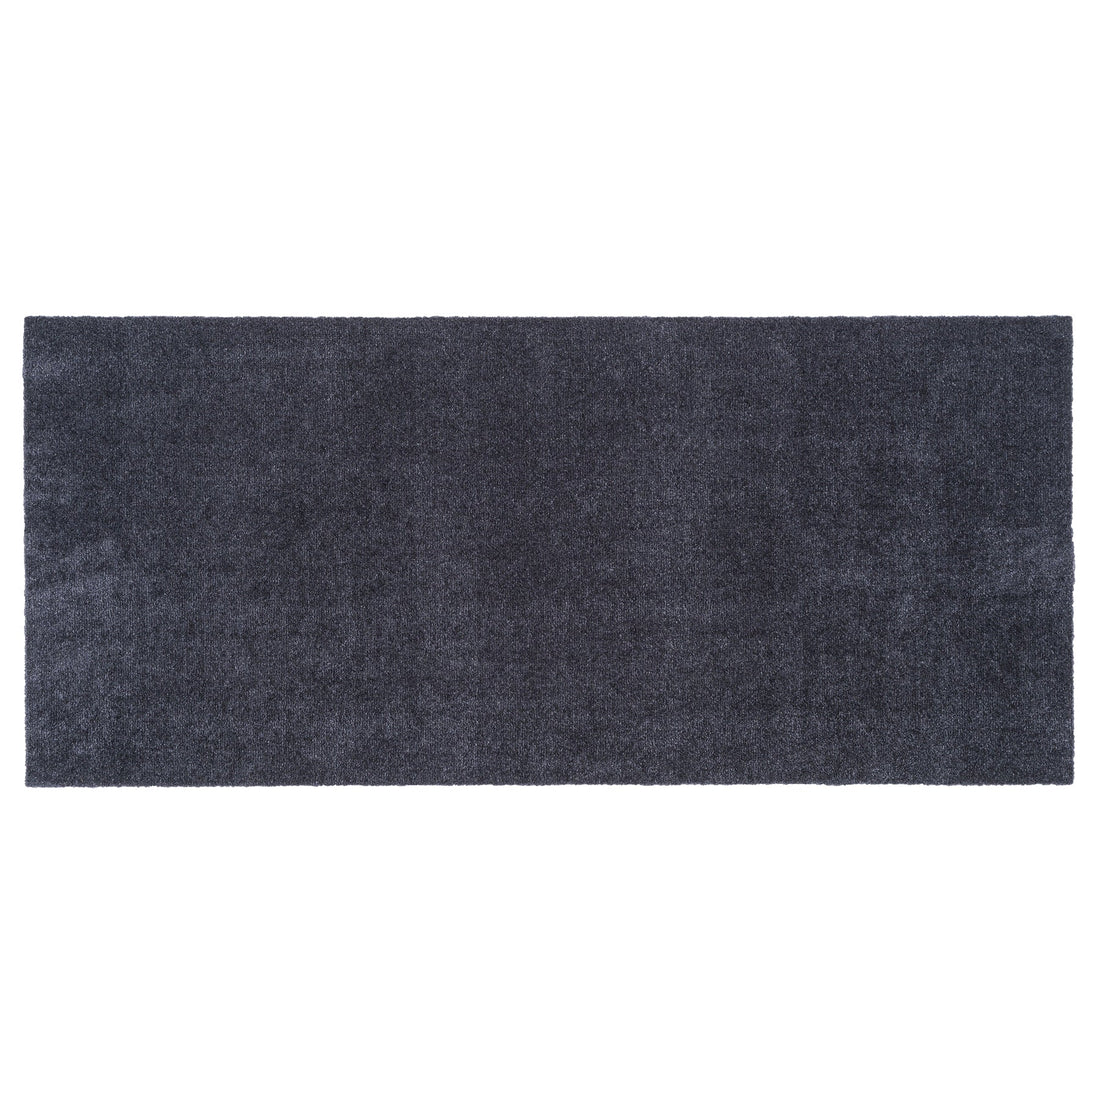 Blanket/had 67 x 150 cm - uni color/gray